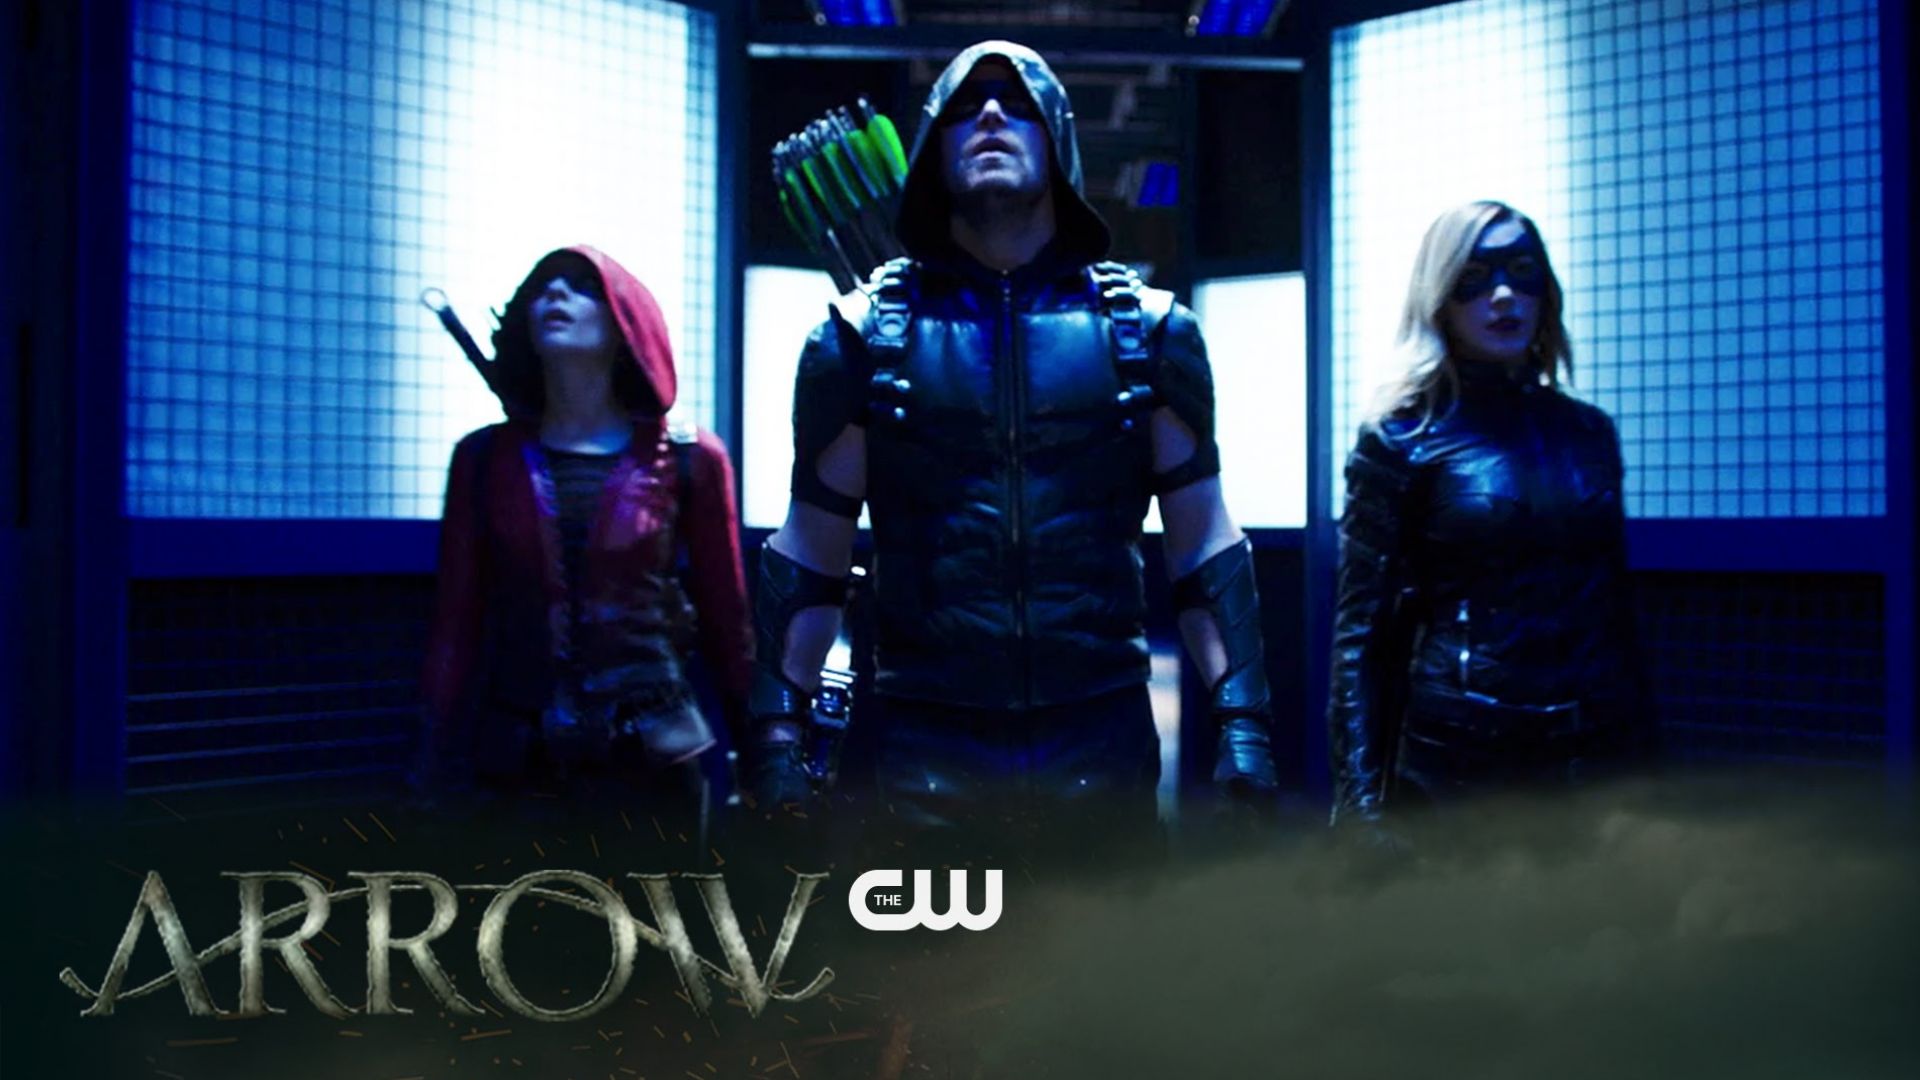 Arrow - Target Trailer - The CW